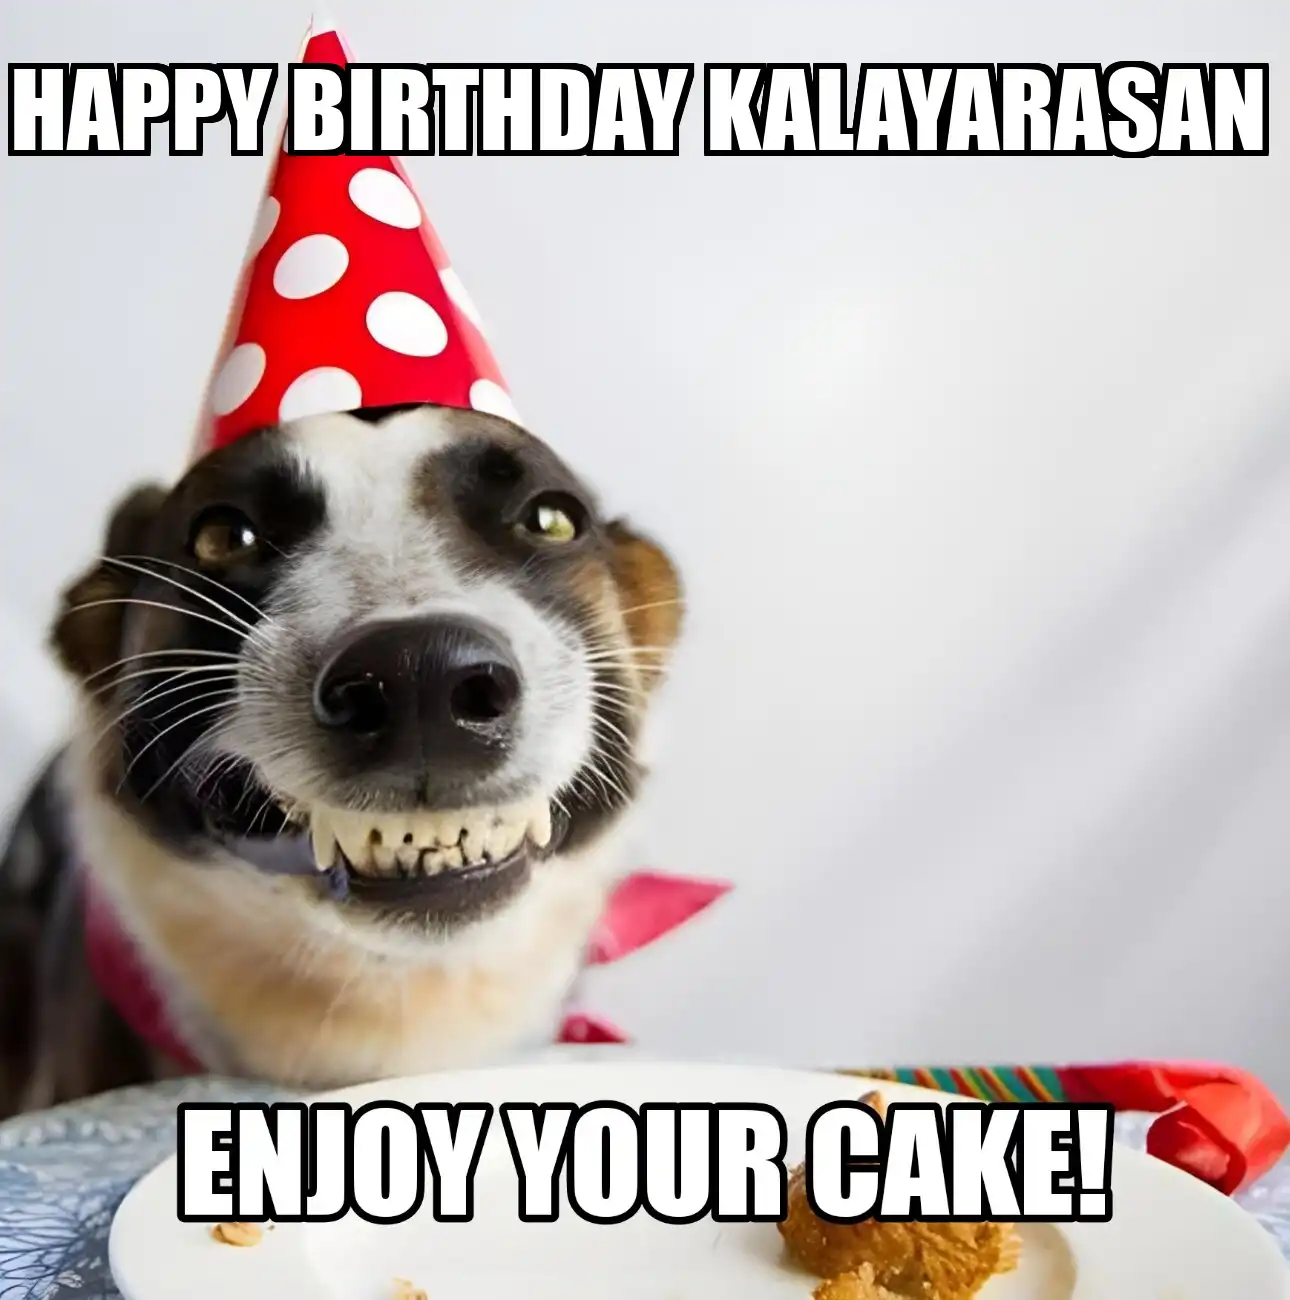 Happy Birthday Kalayarasan Enjoy Your Cake Dog Meme